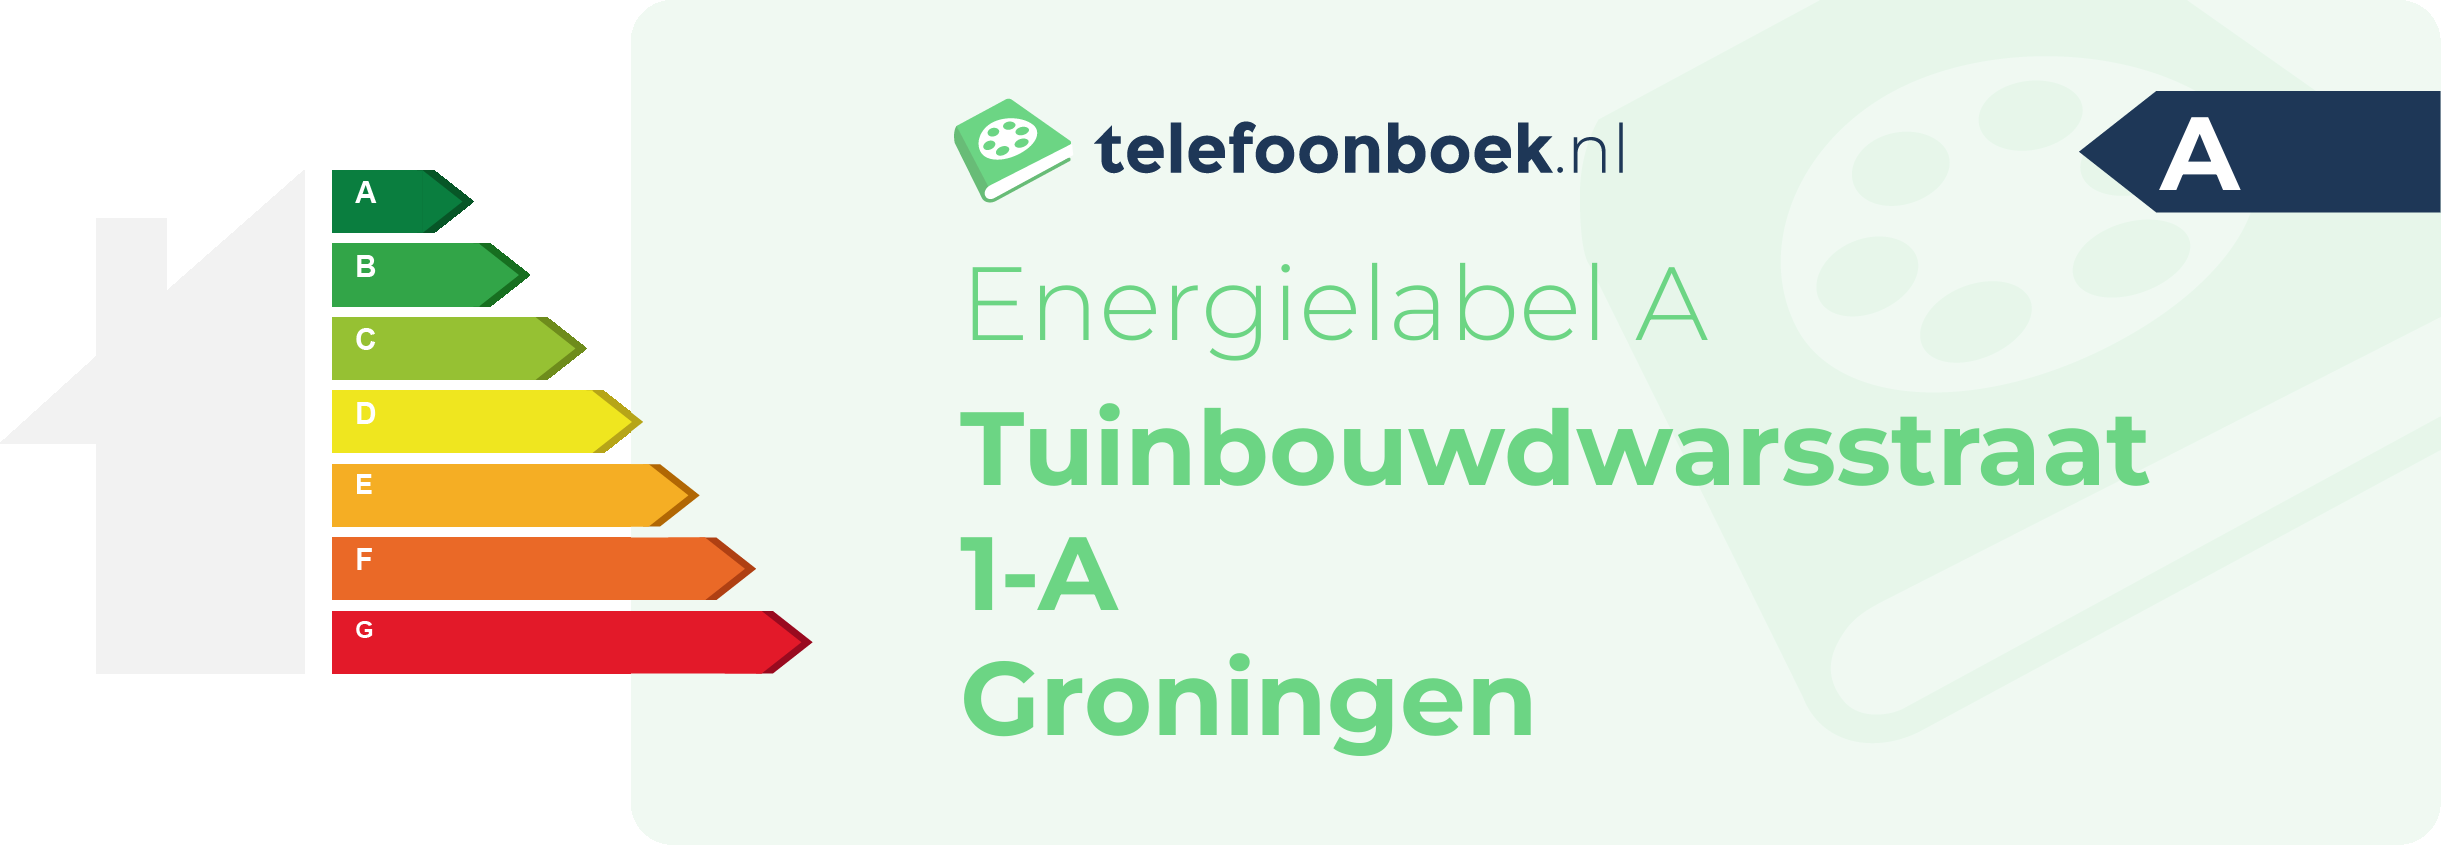 Energielabel Tuinbouwdwarsstraat 1-A Groningen